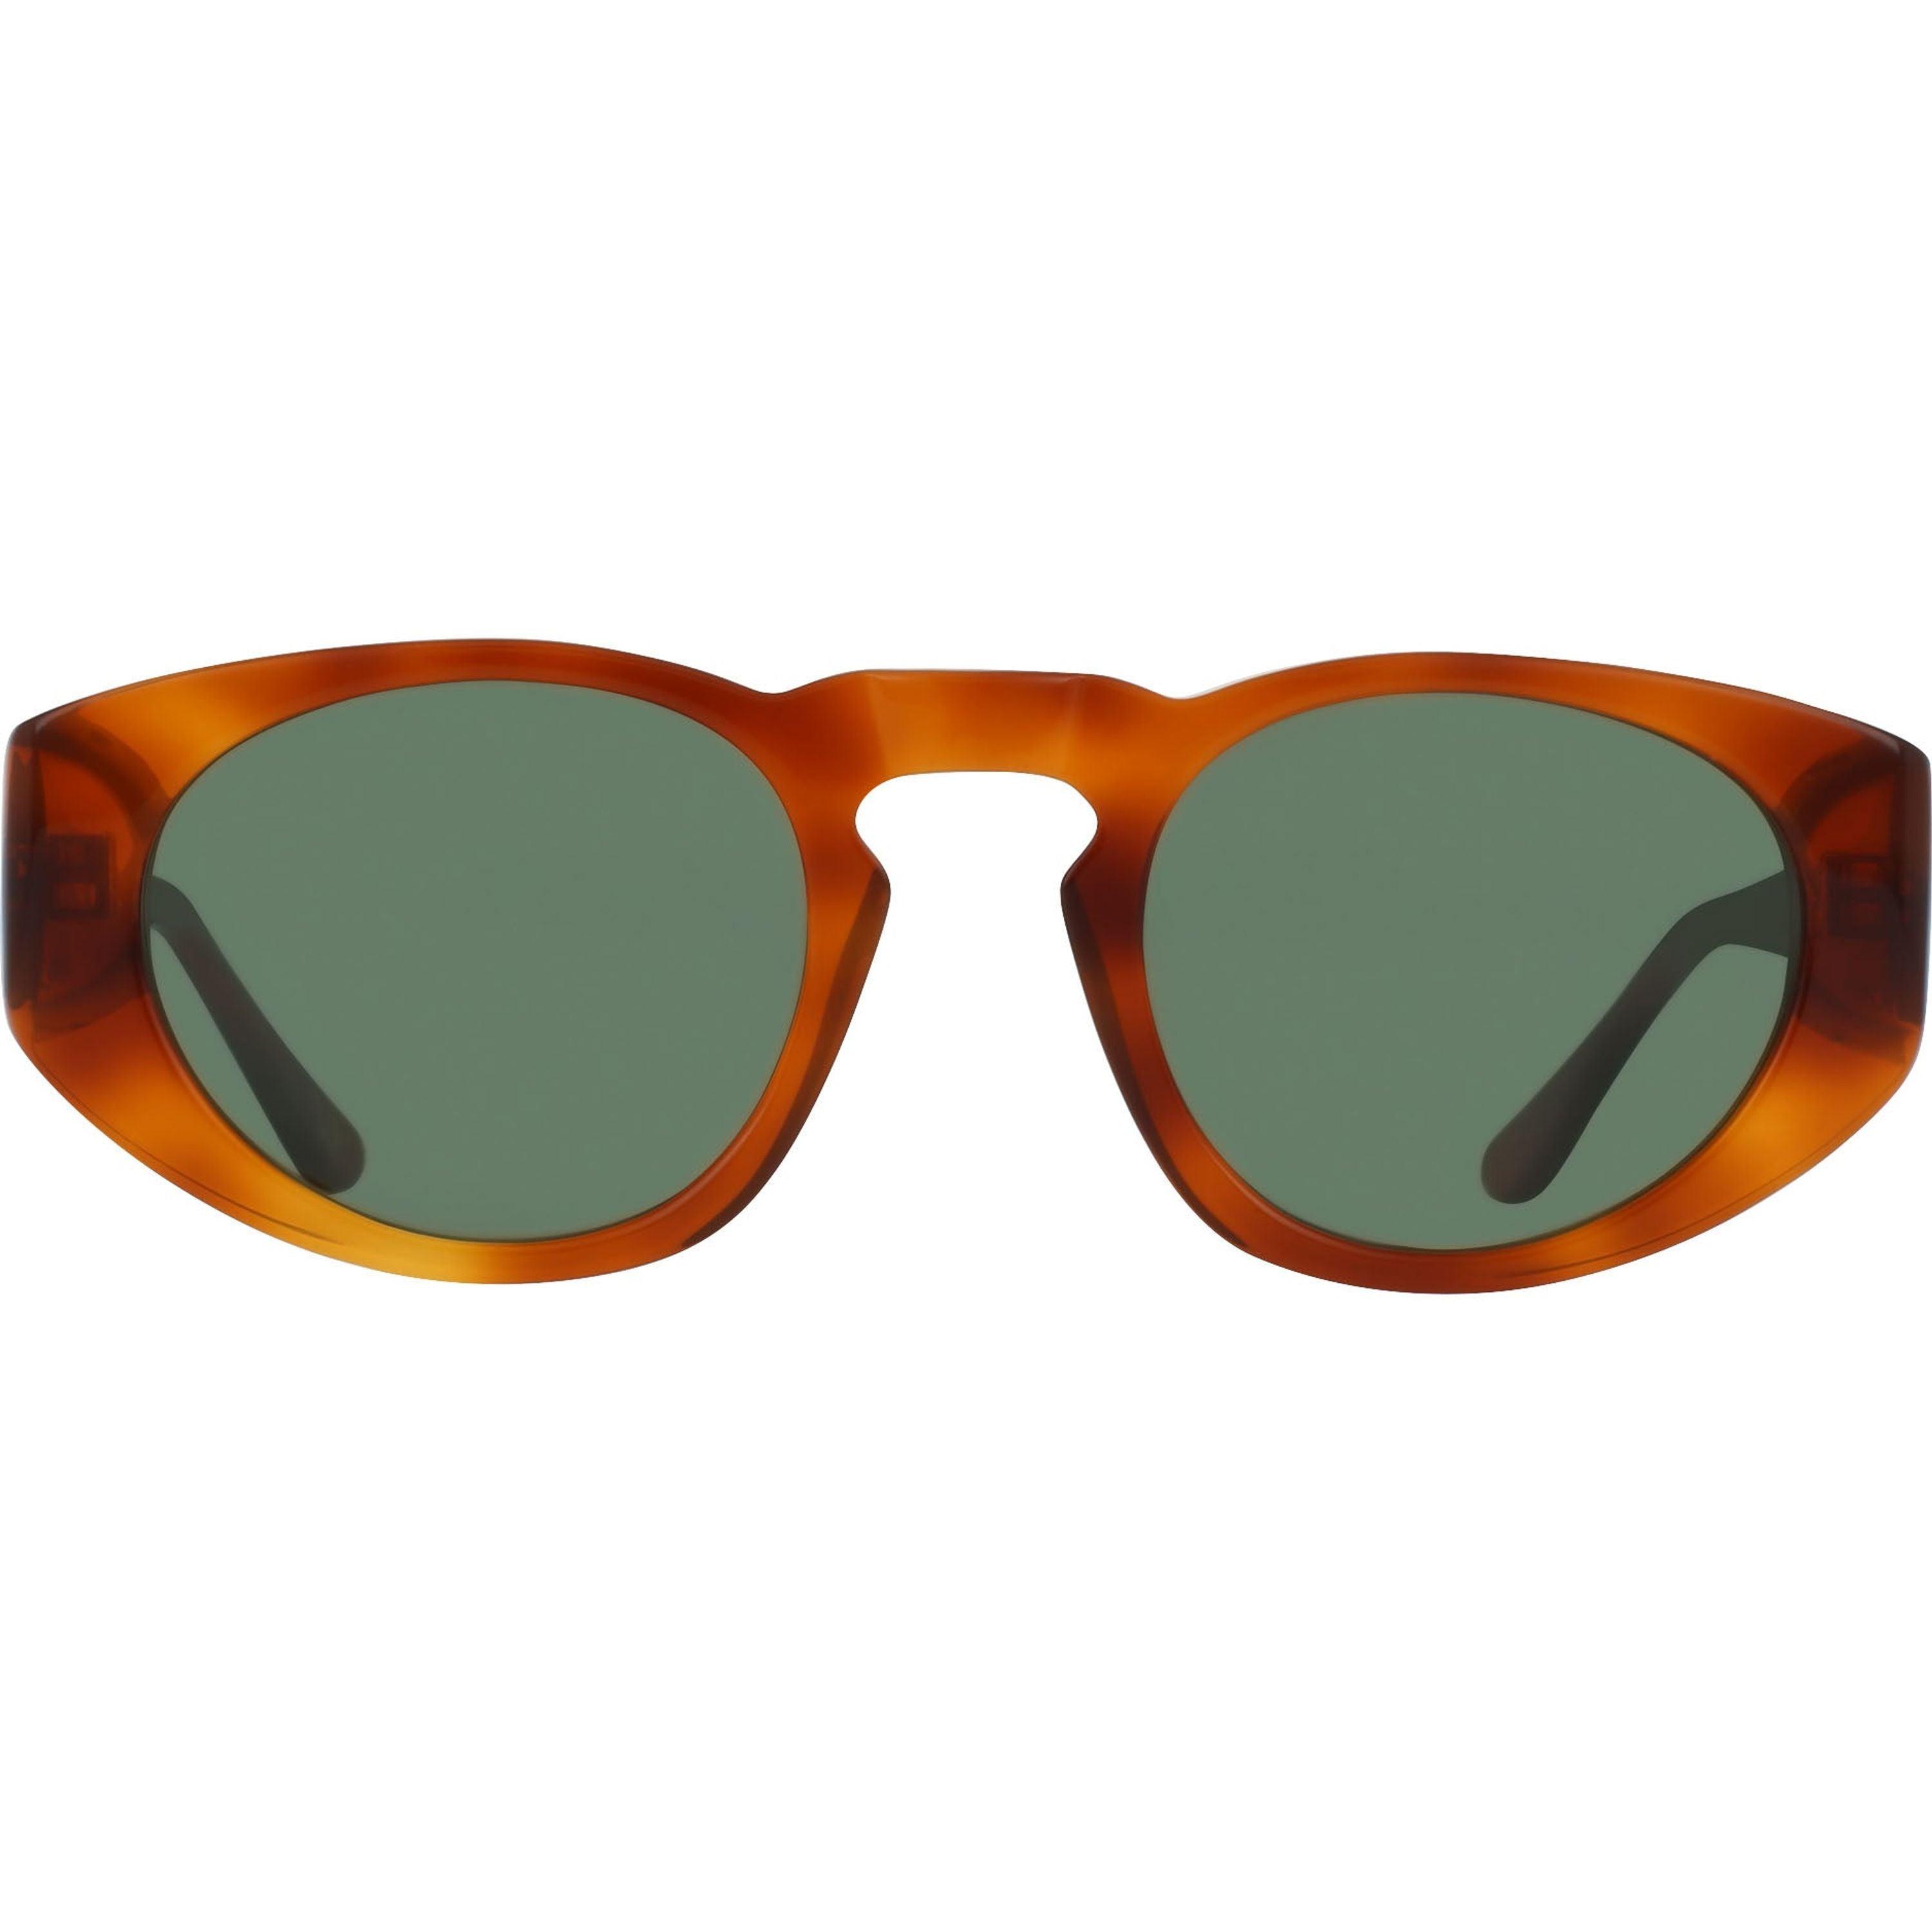 Leonardo Sunglasses | Vint and York